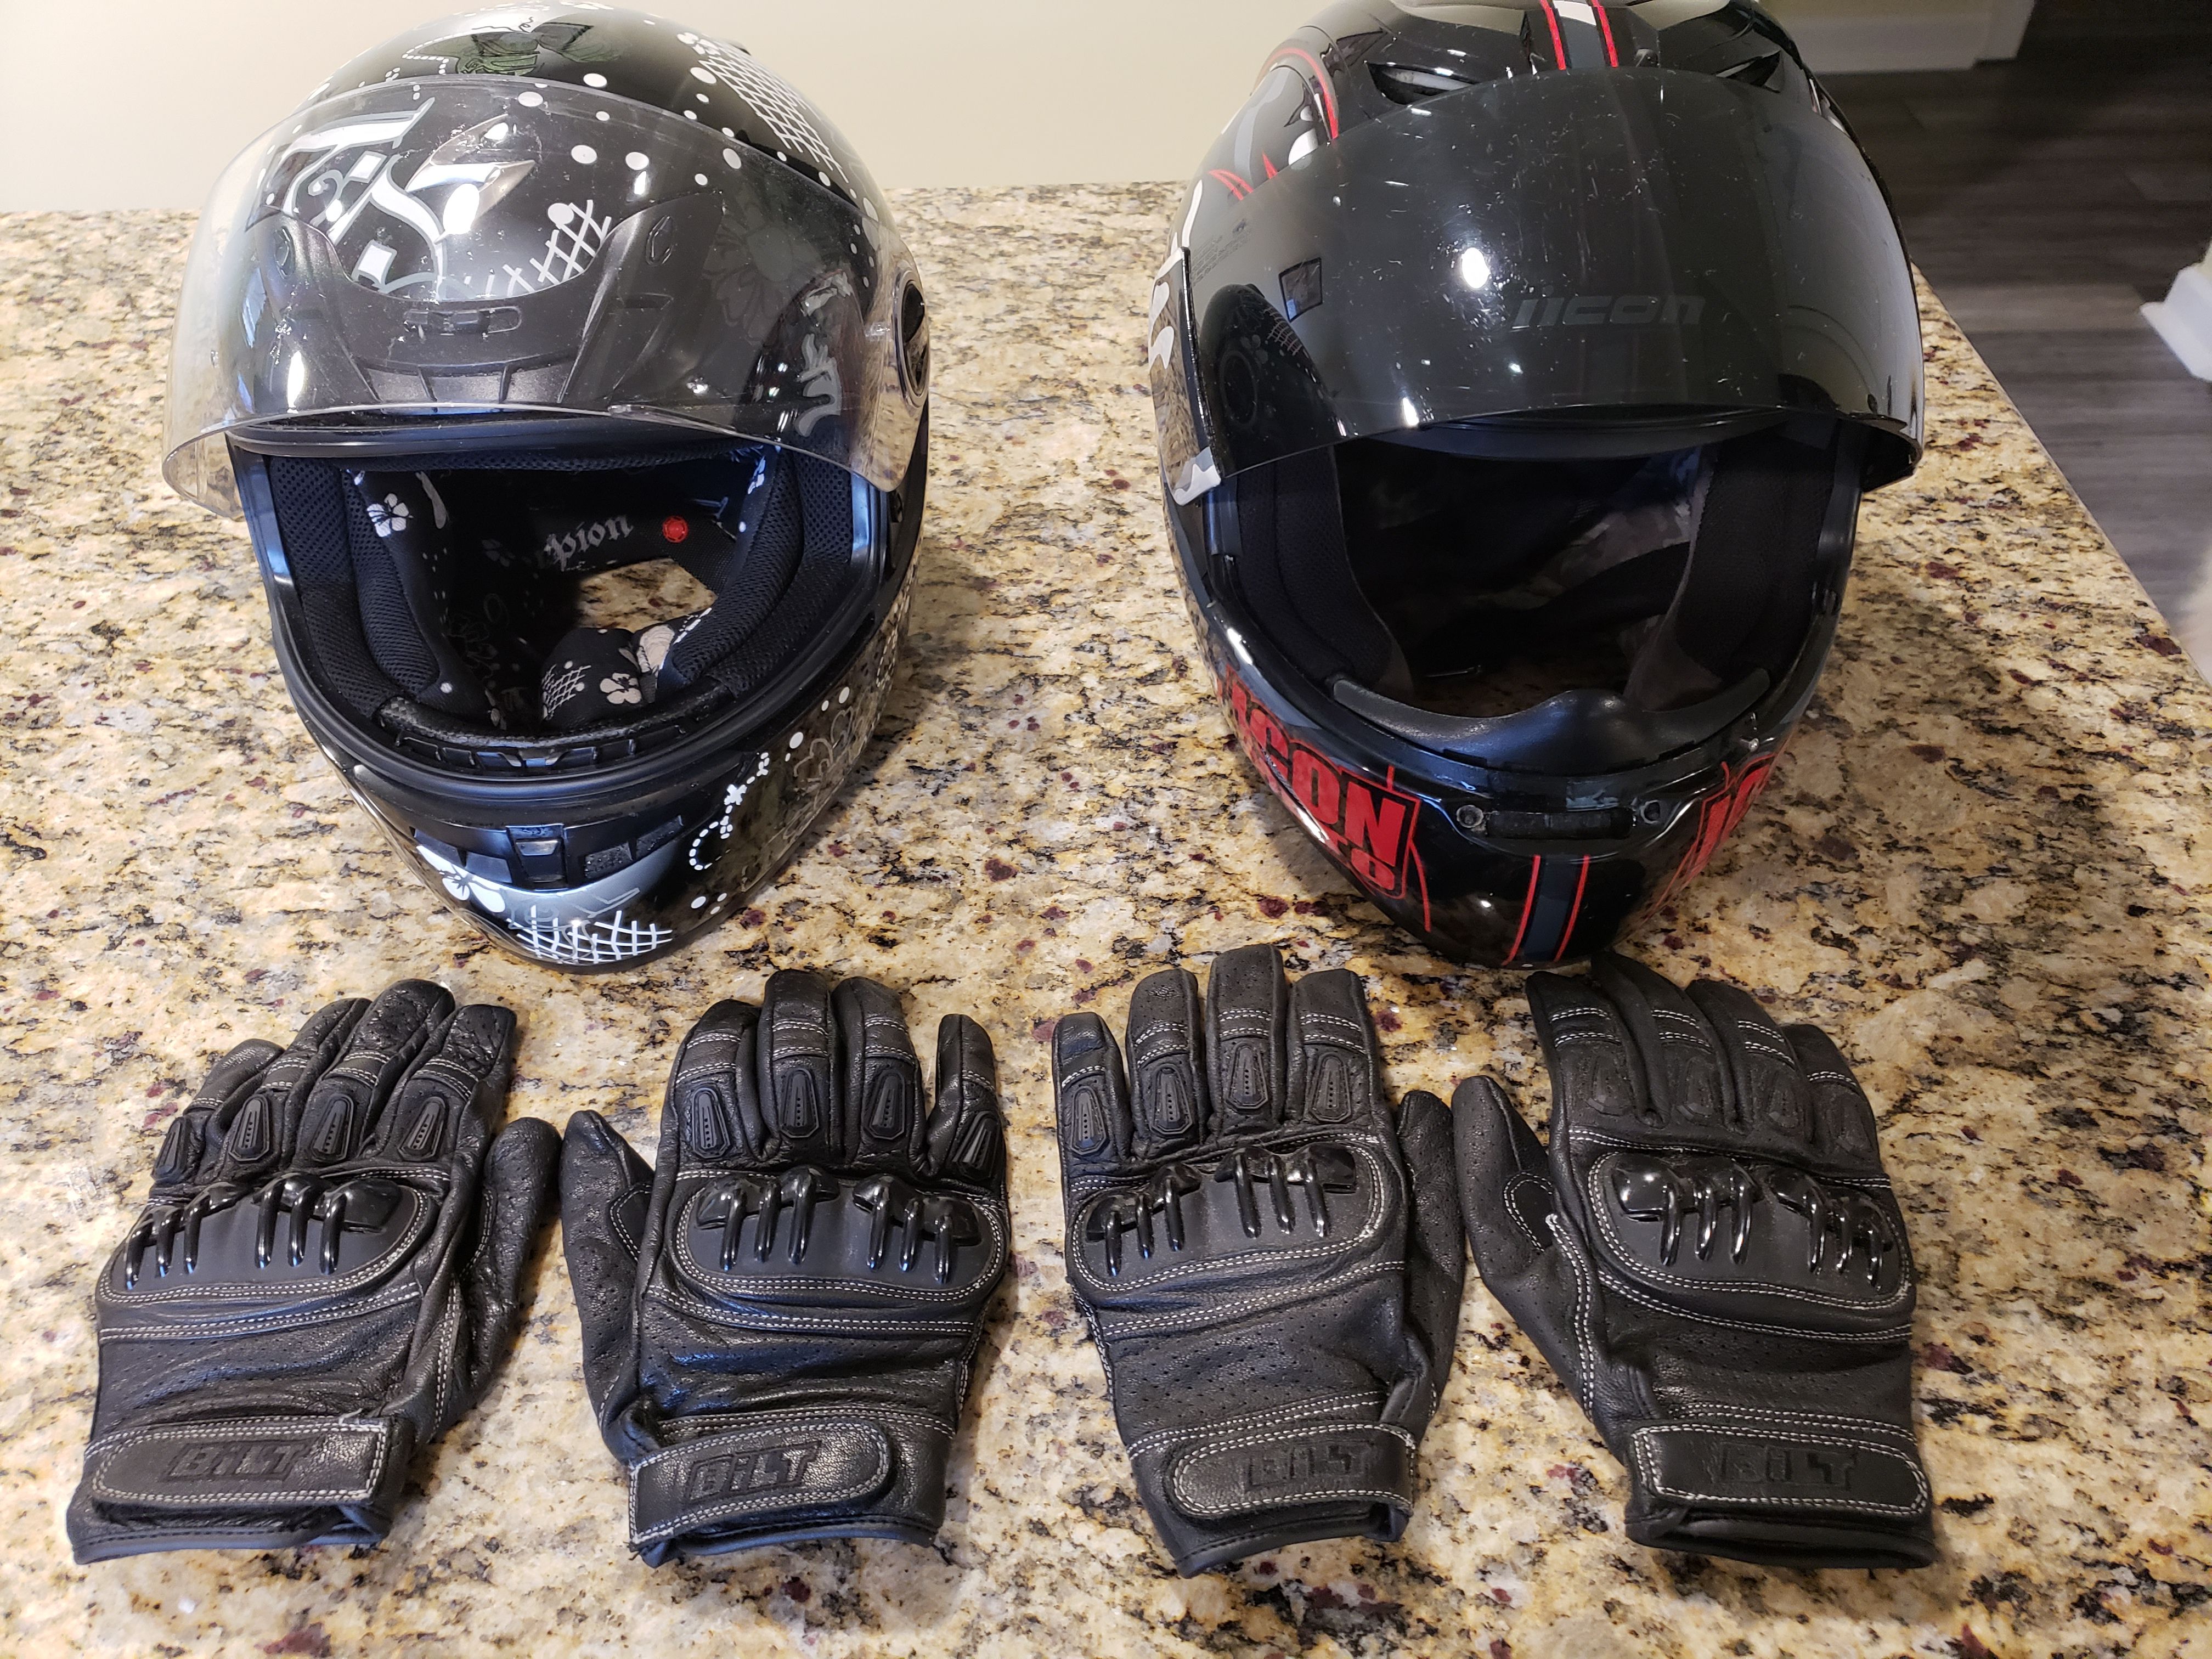 Motorcycle Gear- helmets, gloves, jacket